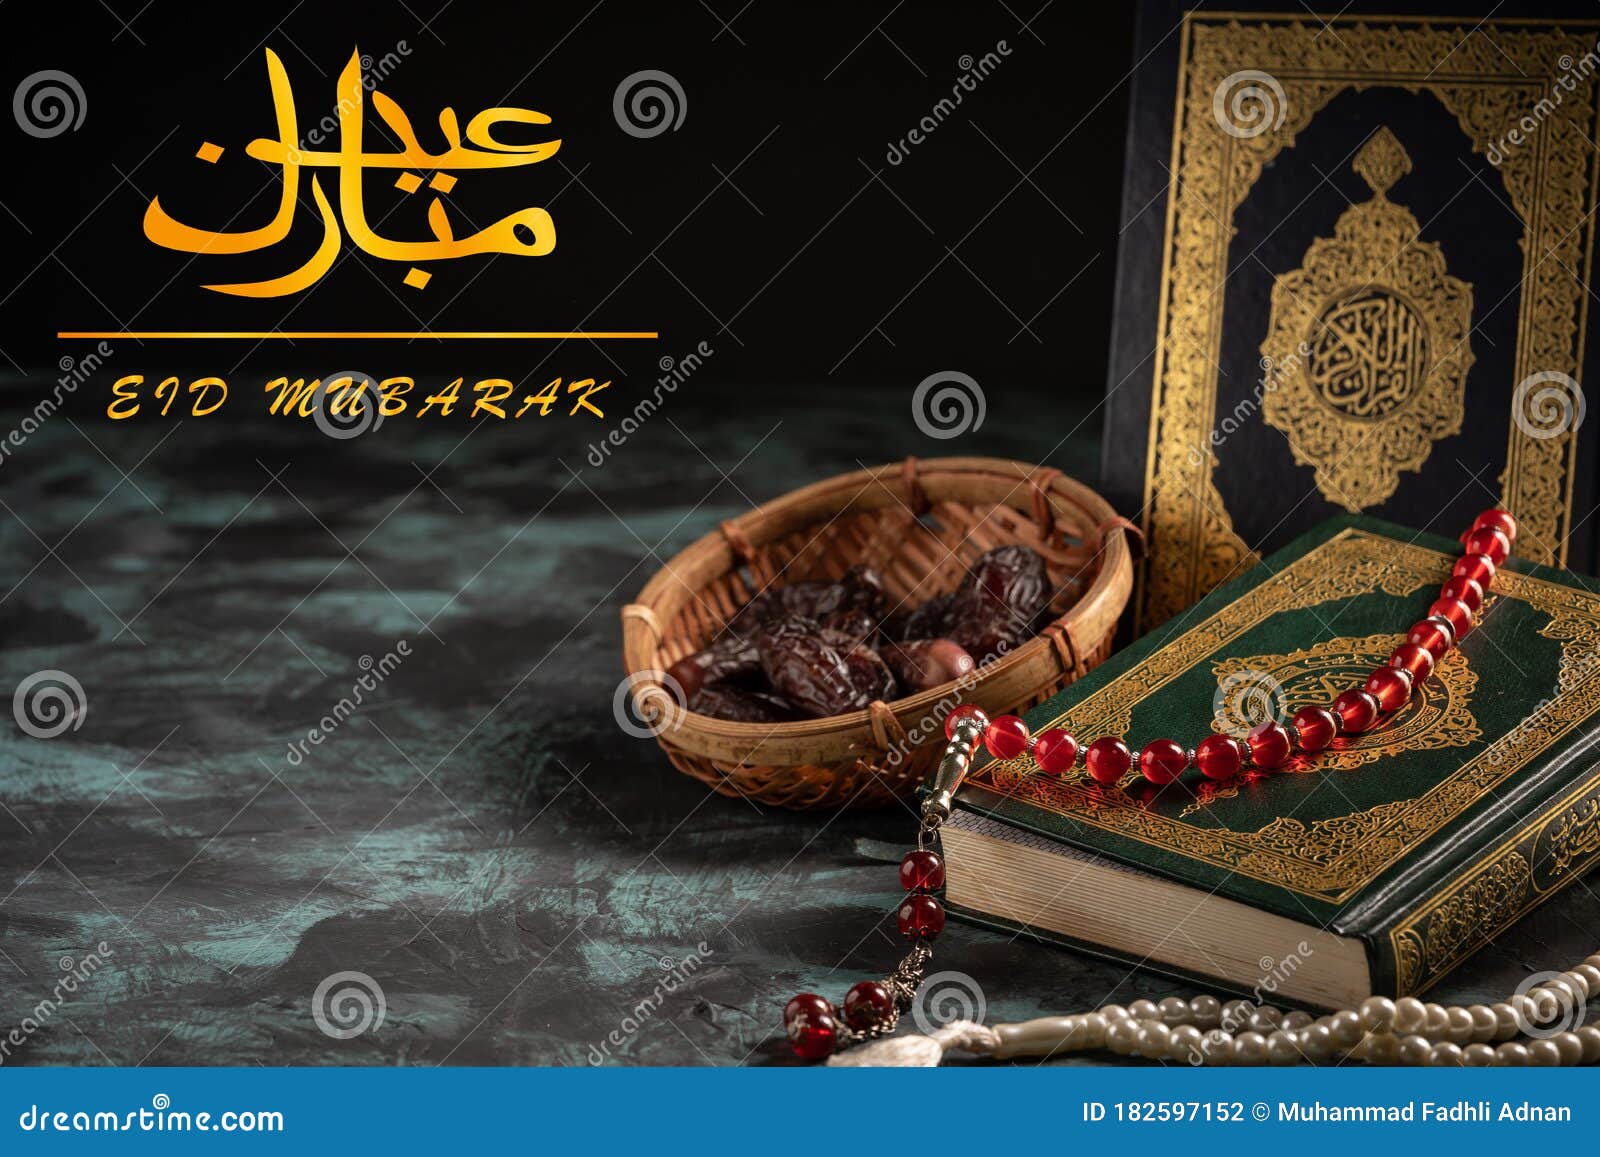 eid mubarak wordings in arabic with the holy qoran.